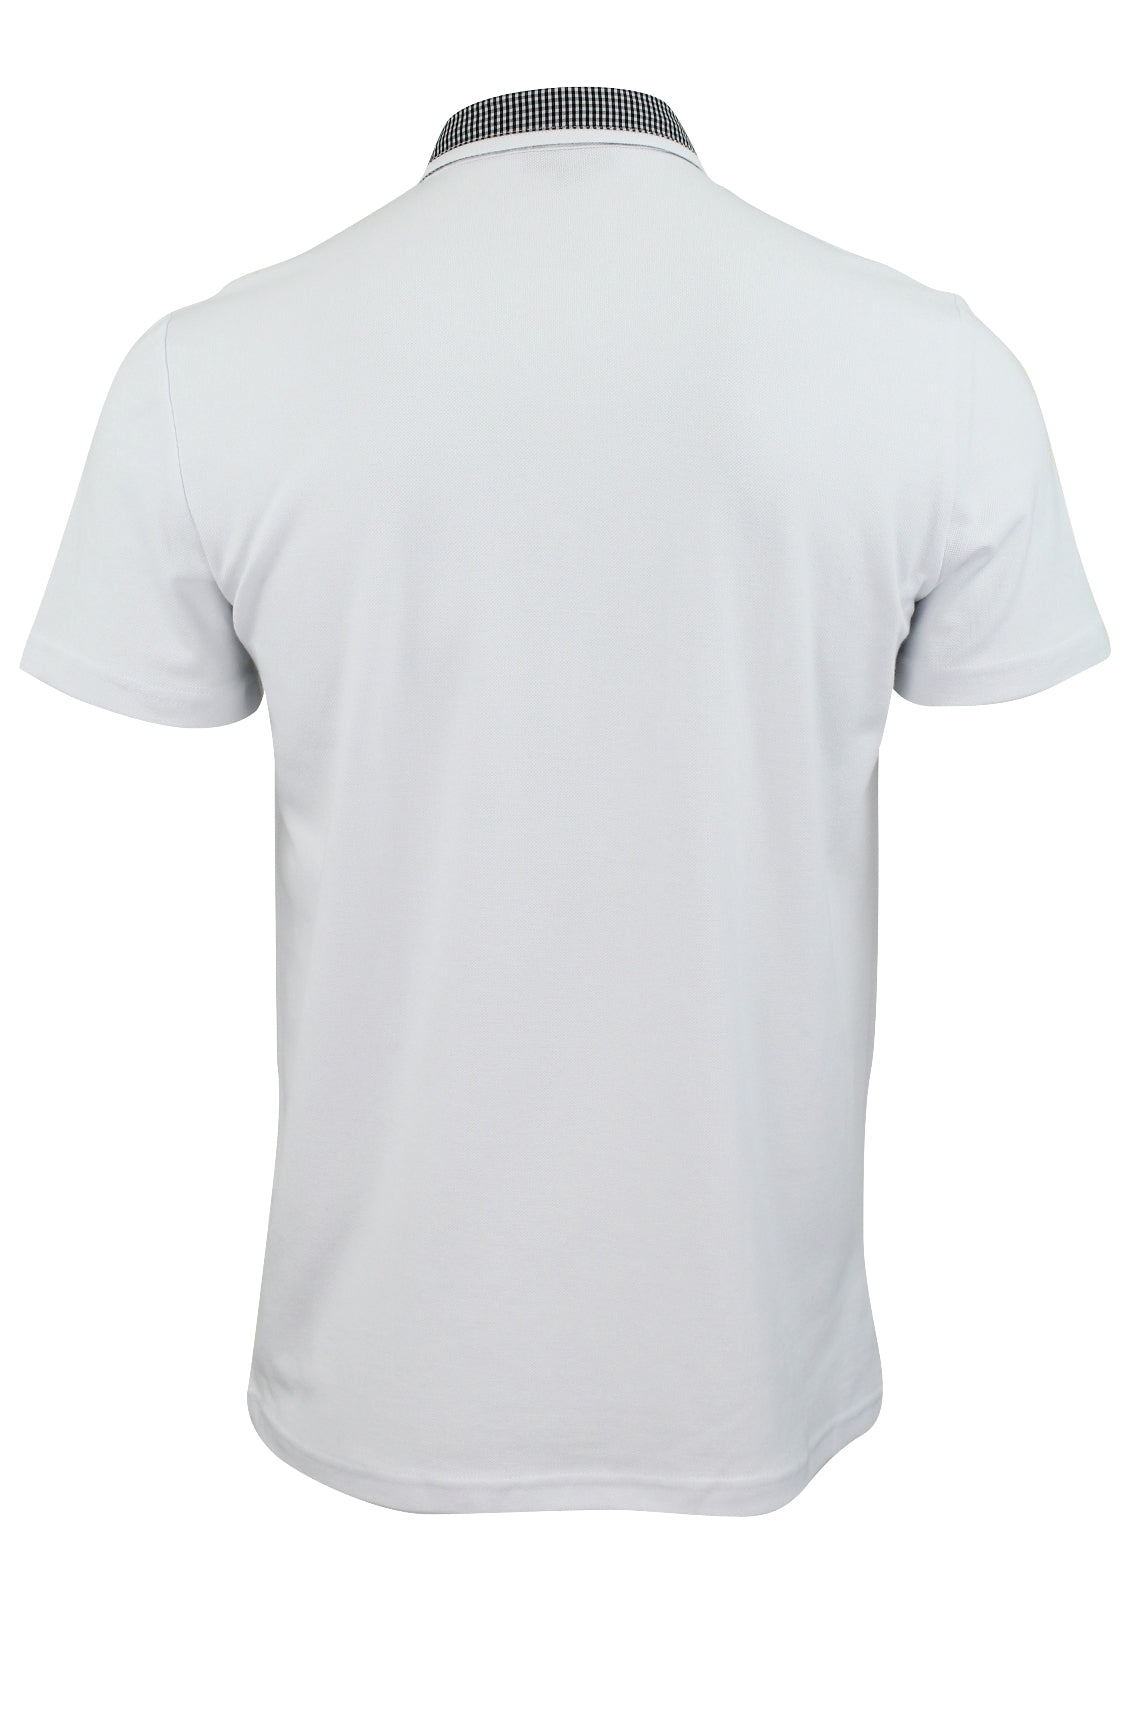 Mens Xact Pique Polo Shirt Cotton Gingham Collar & Trims Button Down (White, L)-4